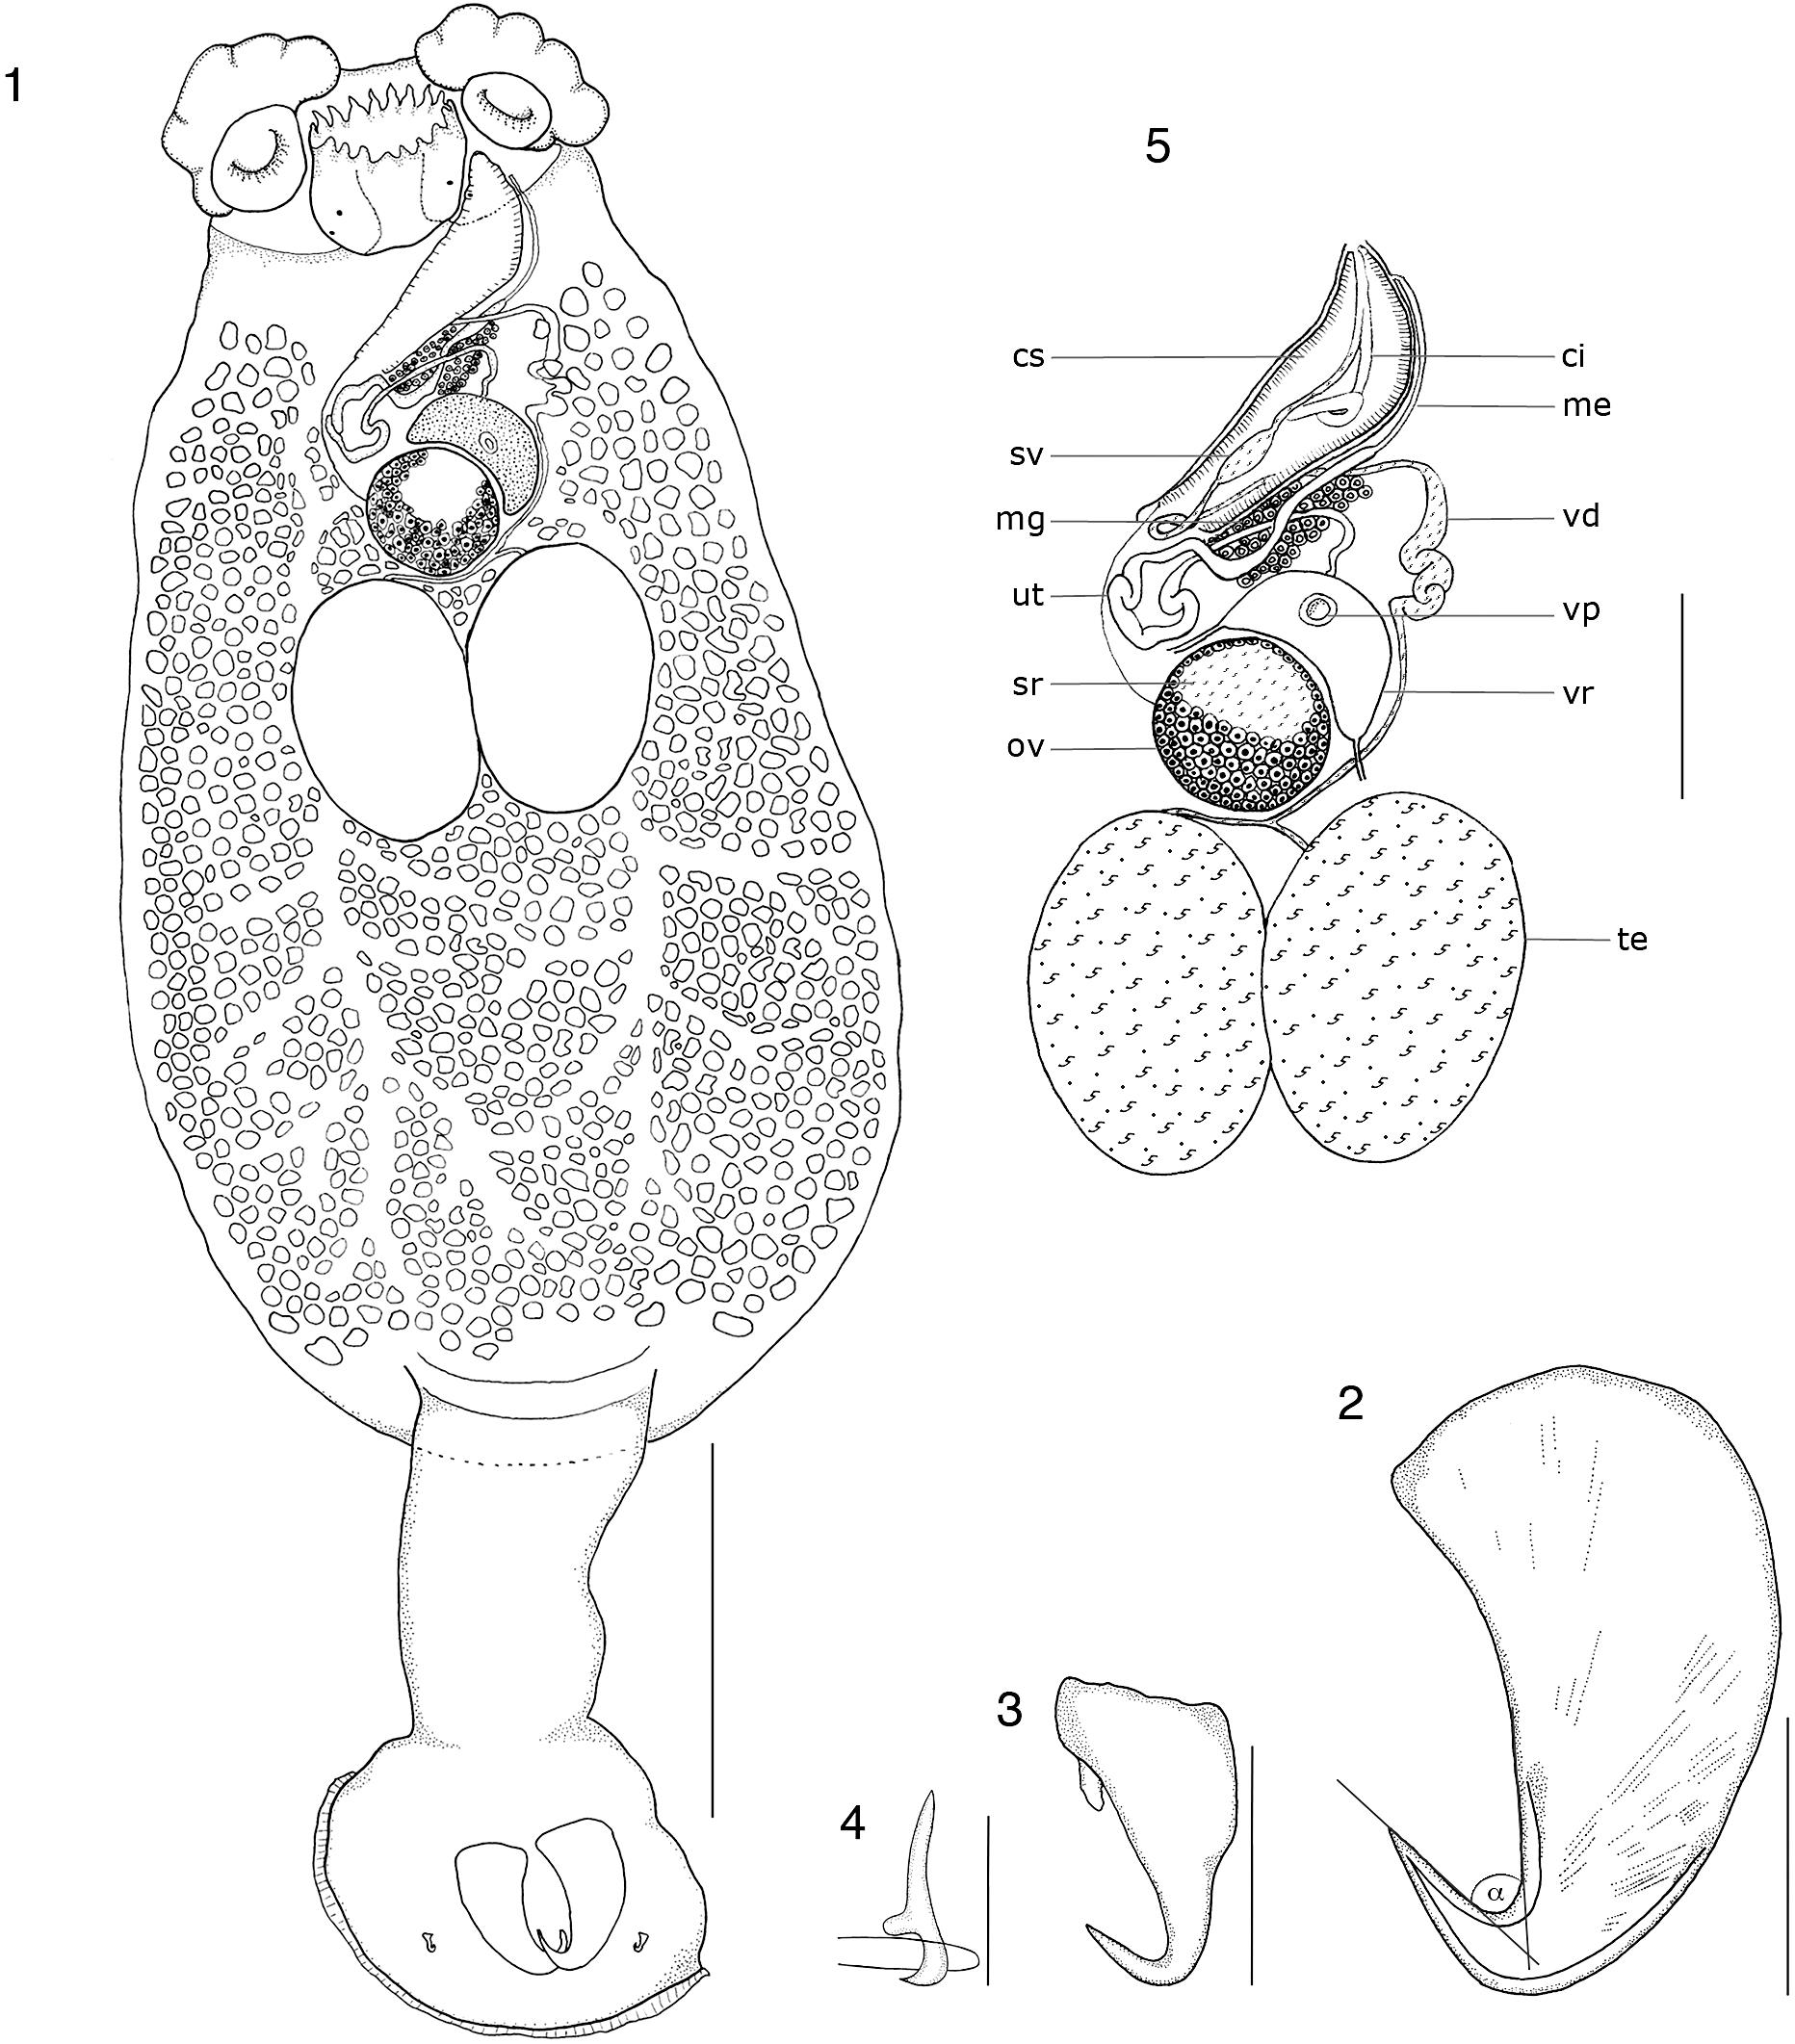 Two New Species of Encotyllabe (Monogenea: Capsalidae) Based on ...